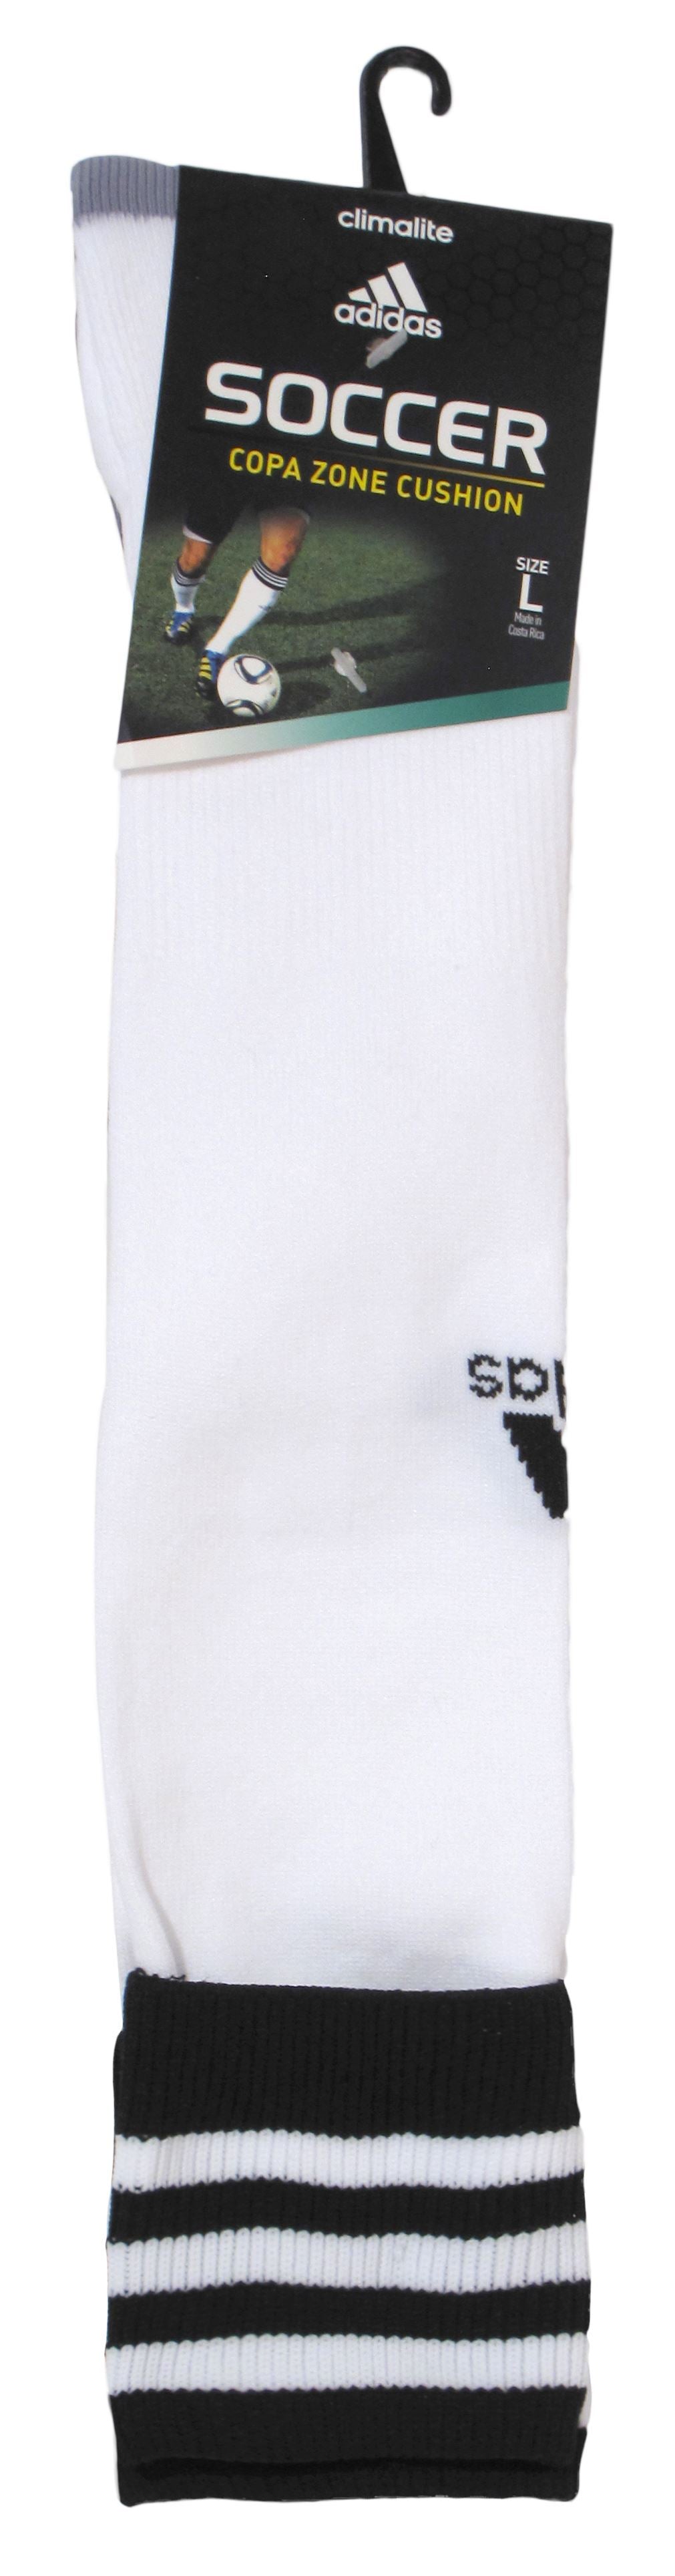 adidas Copa Zone Cushion 2.0 Socks (White/Black) Soccer Socks adidas 